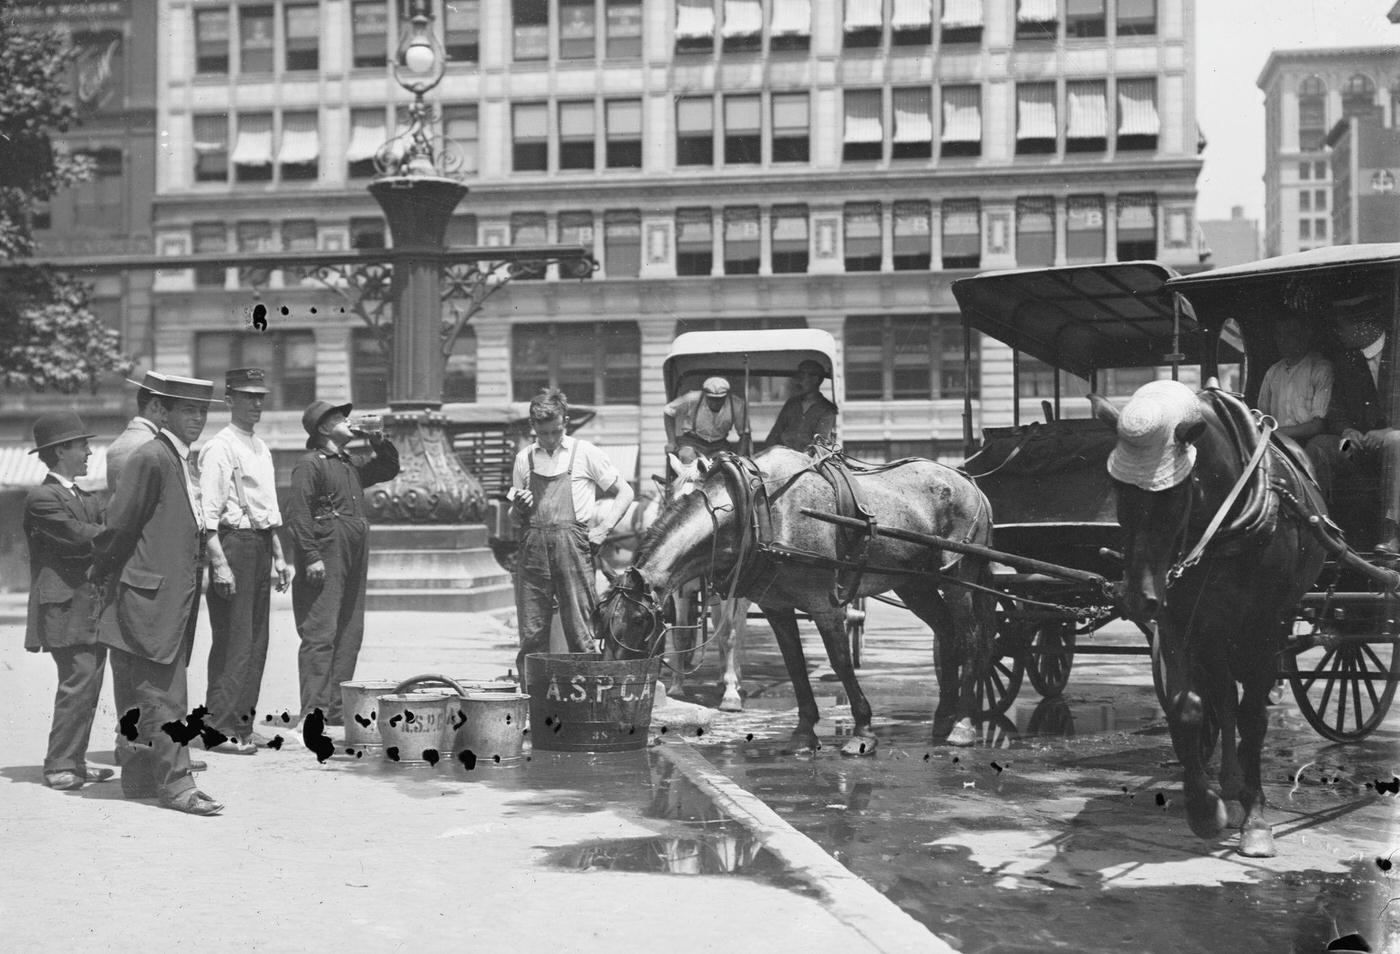 Manhattan Aspca Provides Water For Horses, New York City, Circa 1900